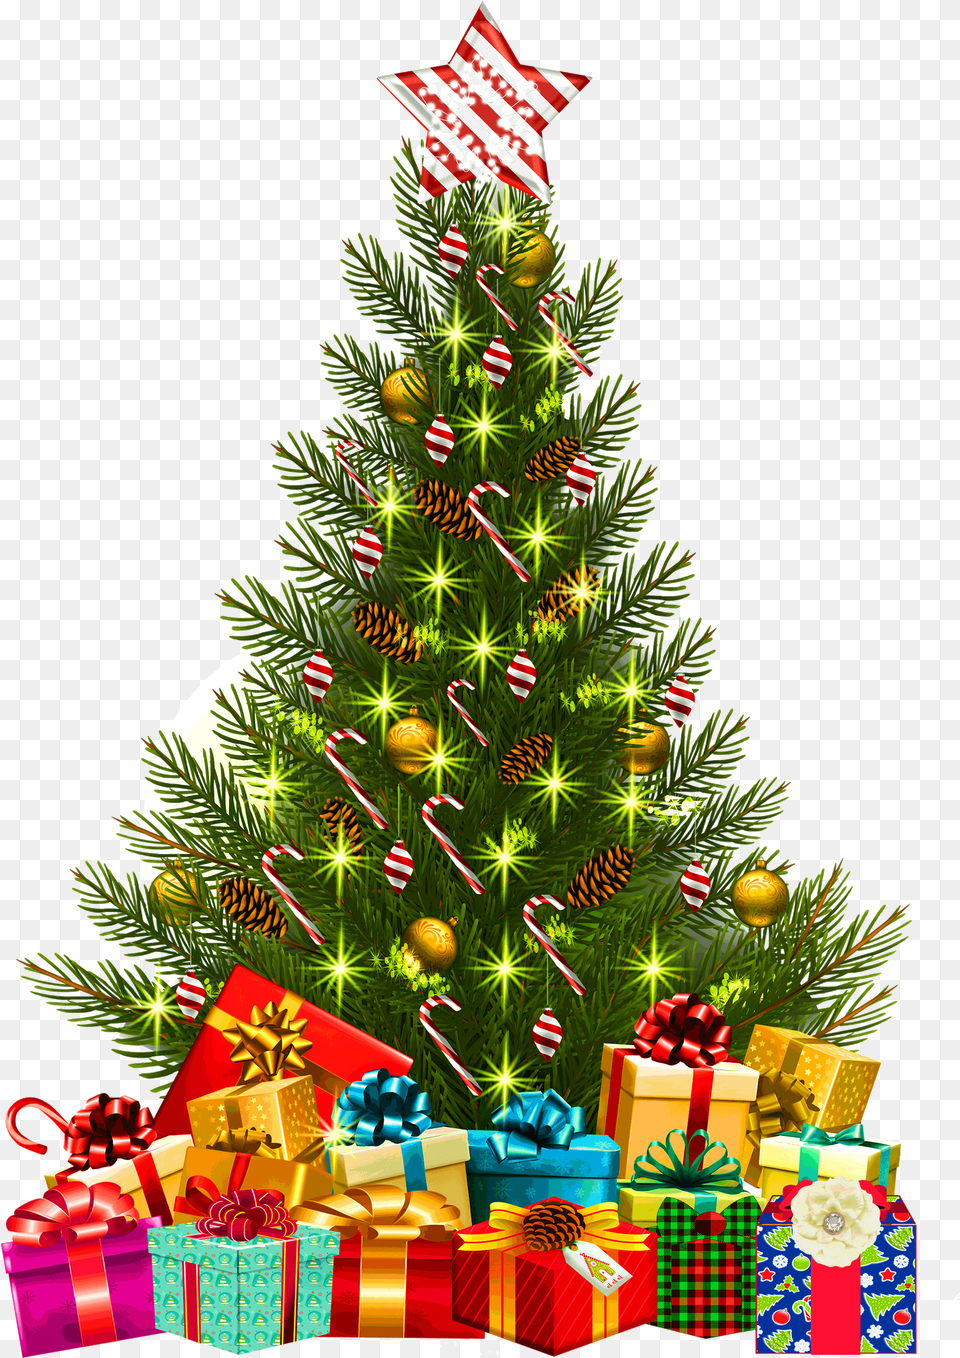 Christmas Tree Amp Presents, Plant, Christmas Decorations, Festival, Christmas Tree Png